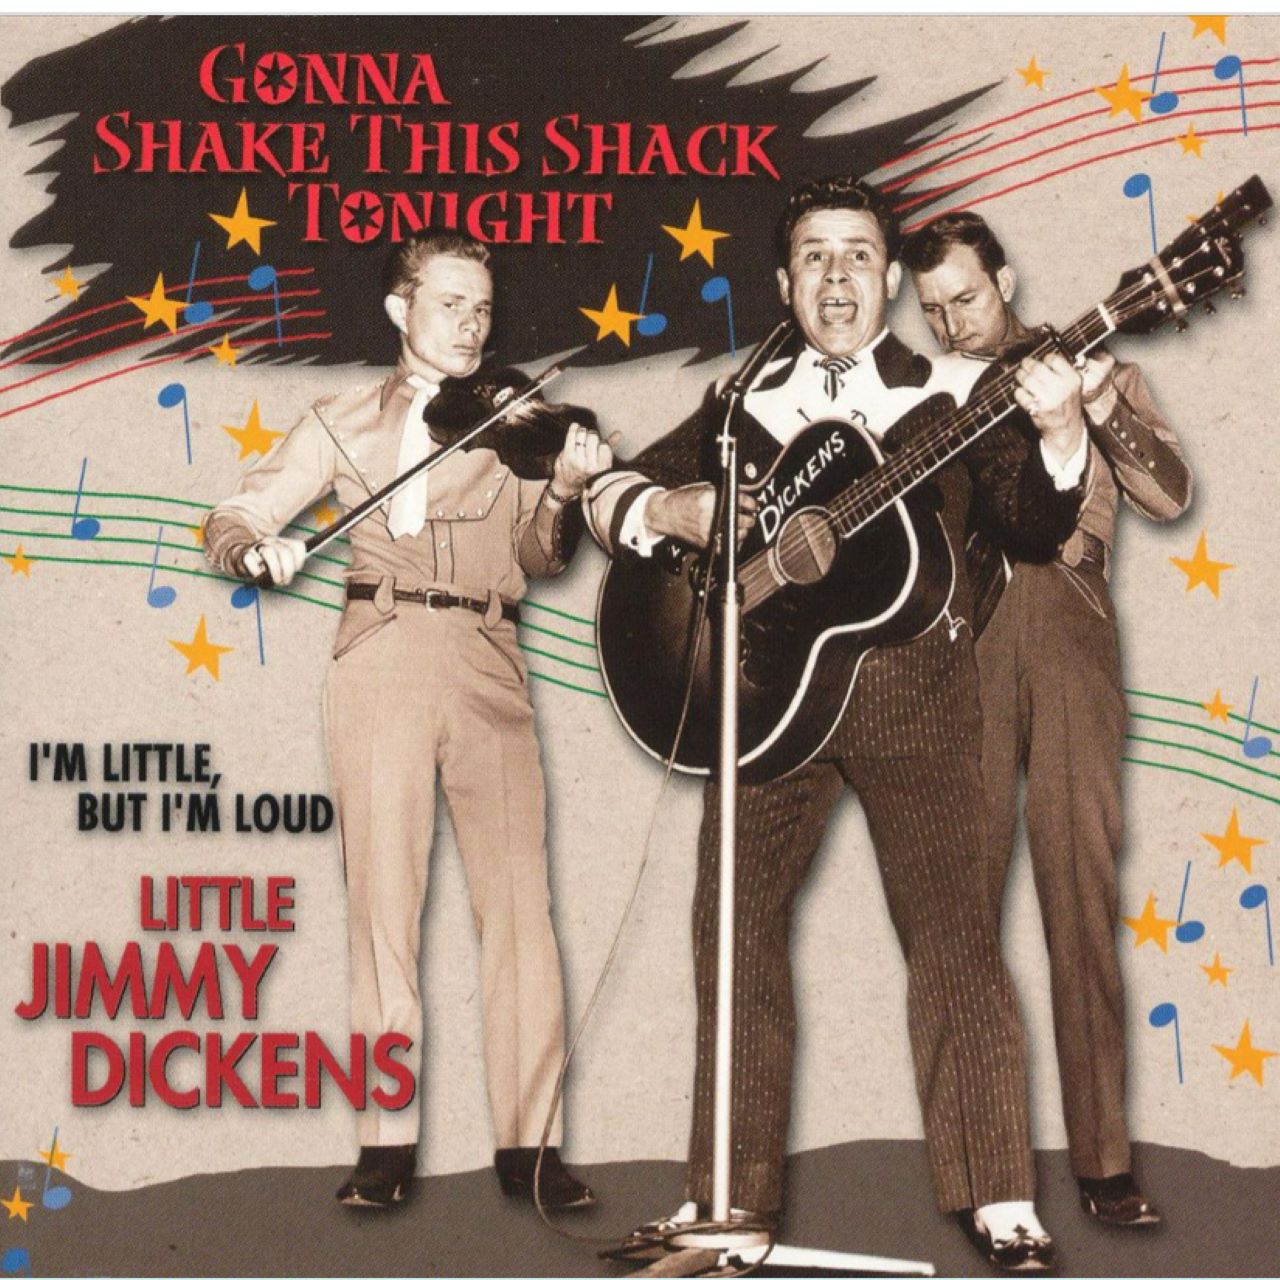 Little Jimmy Dicken - Gonna Shake This Shack Tonight cover album